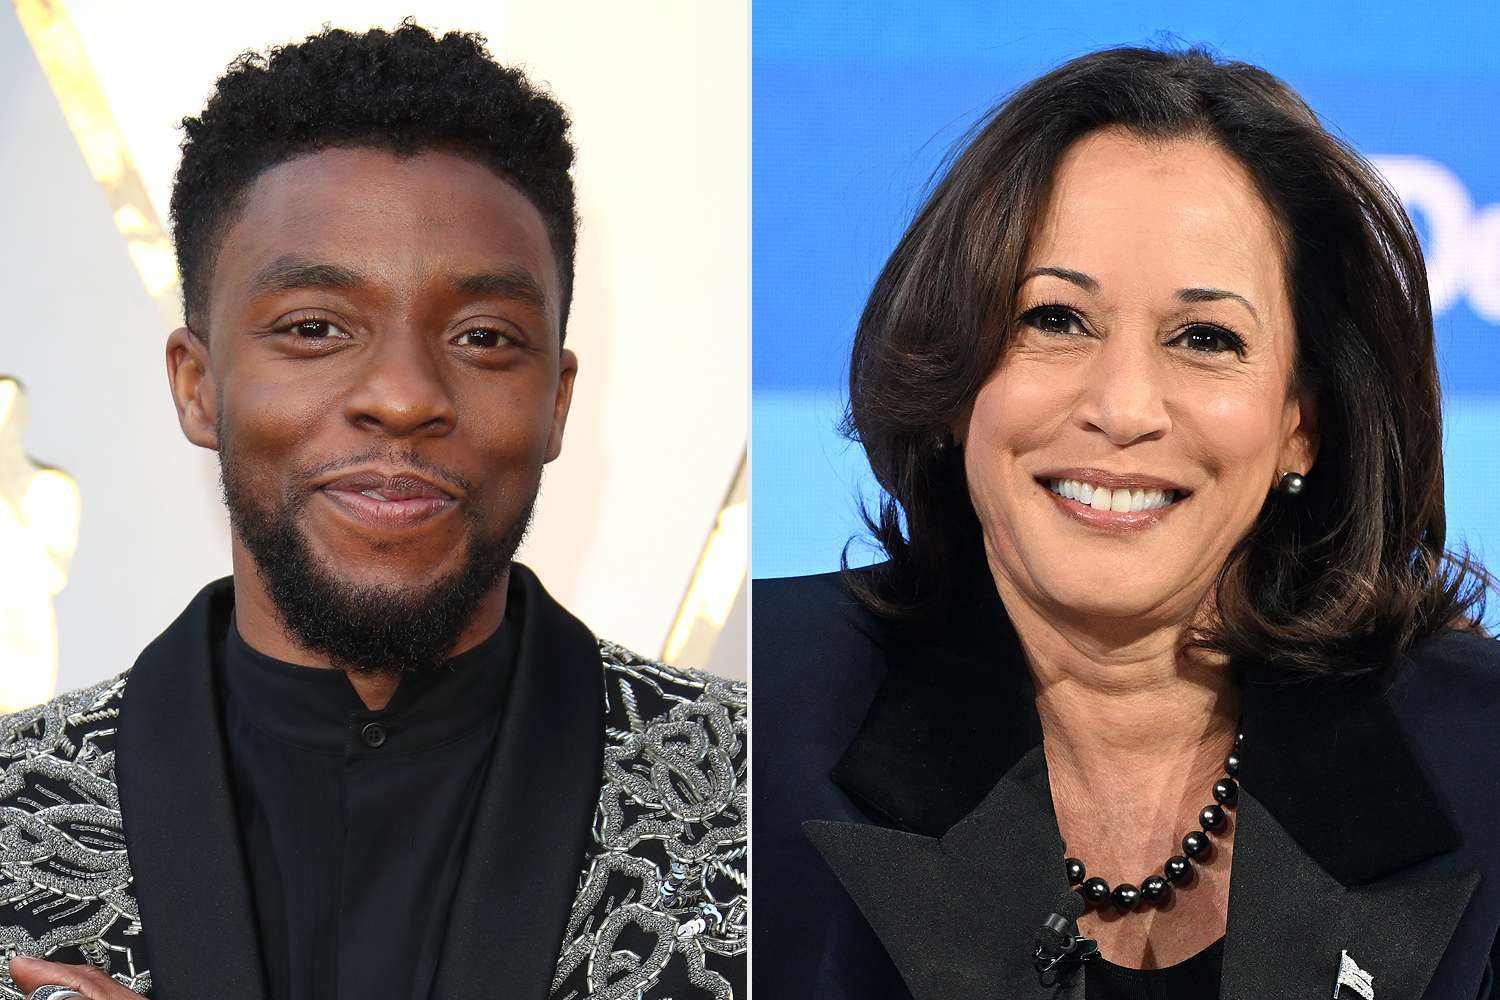 'Black Panther' star Chadwick Boseman’s final tweet was in support of Kamala Harris